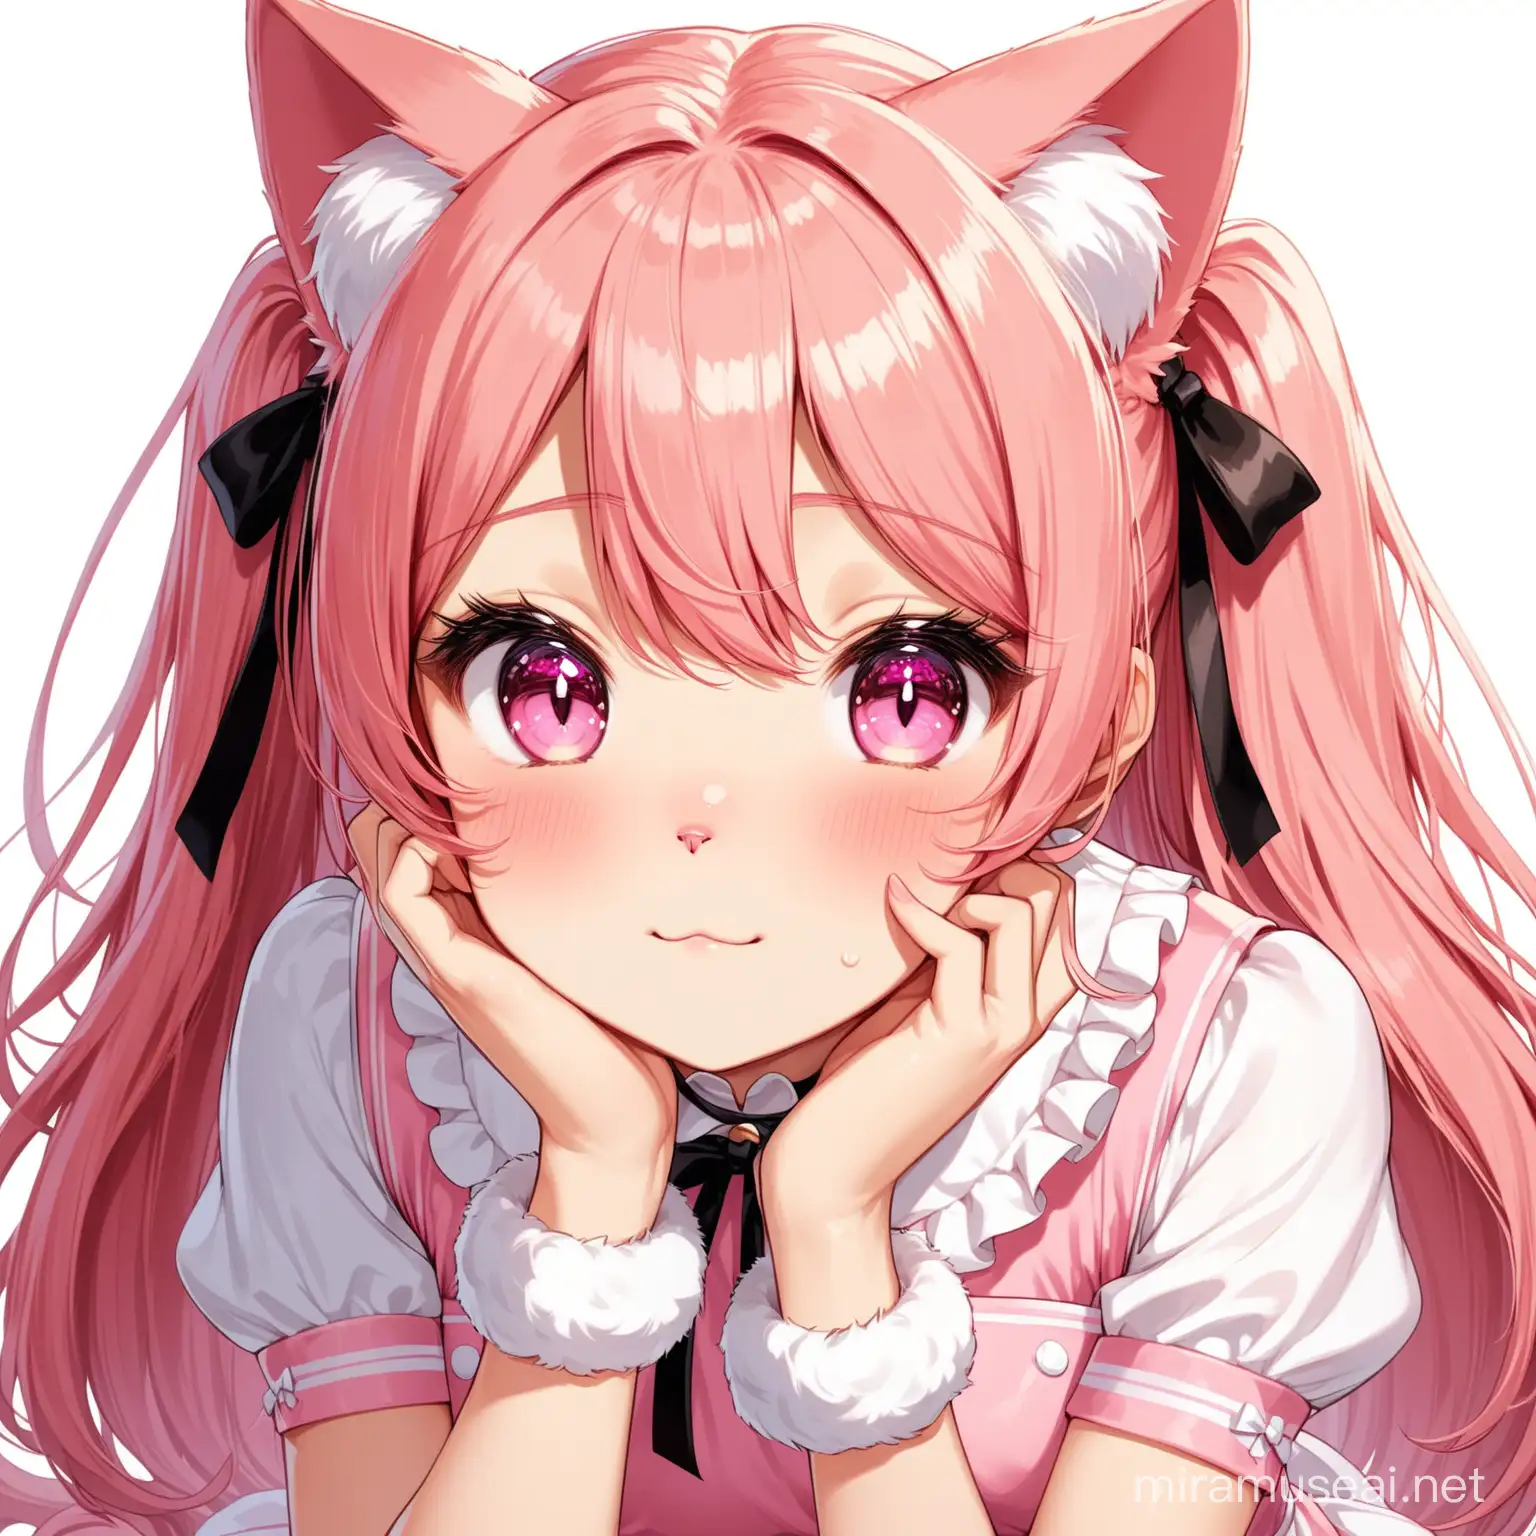 Kawaii Cat Girl Maid Receives a Headpat from Viewer